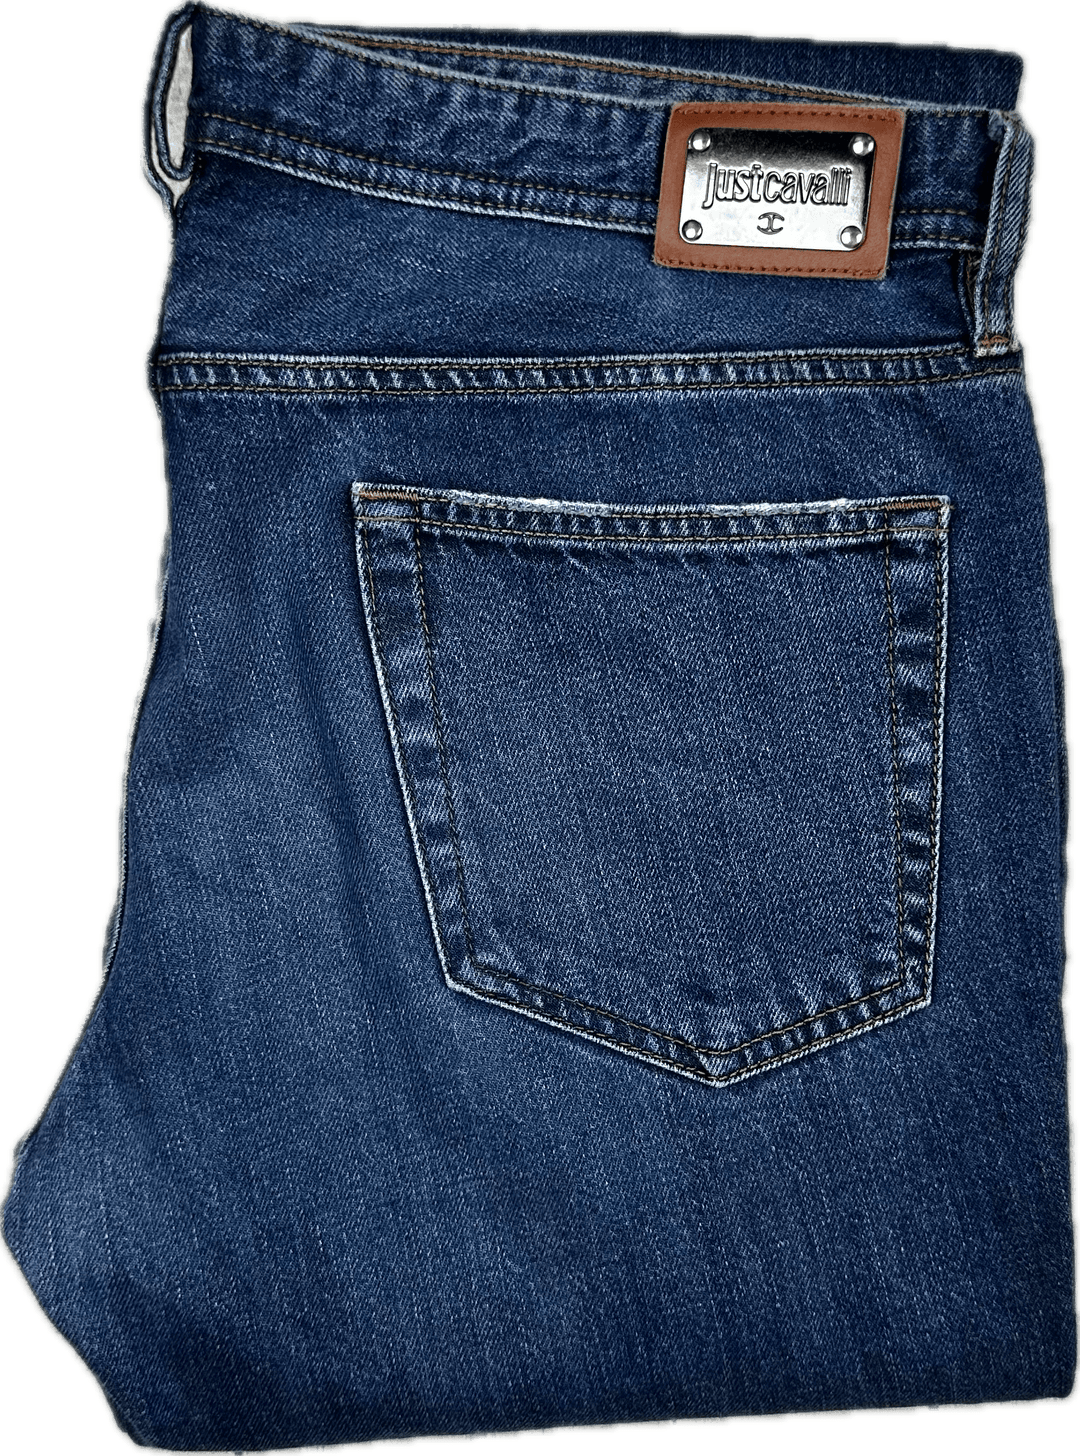 Just Cavalli Italian 'Regular' Straight Wash Jeans - Size 33 - Jean Pool